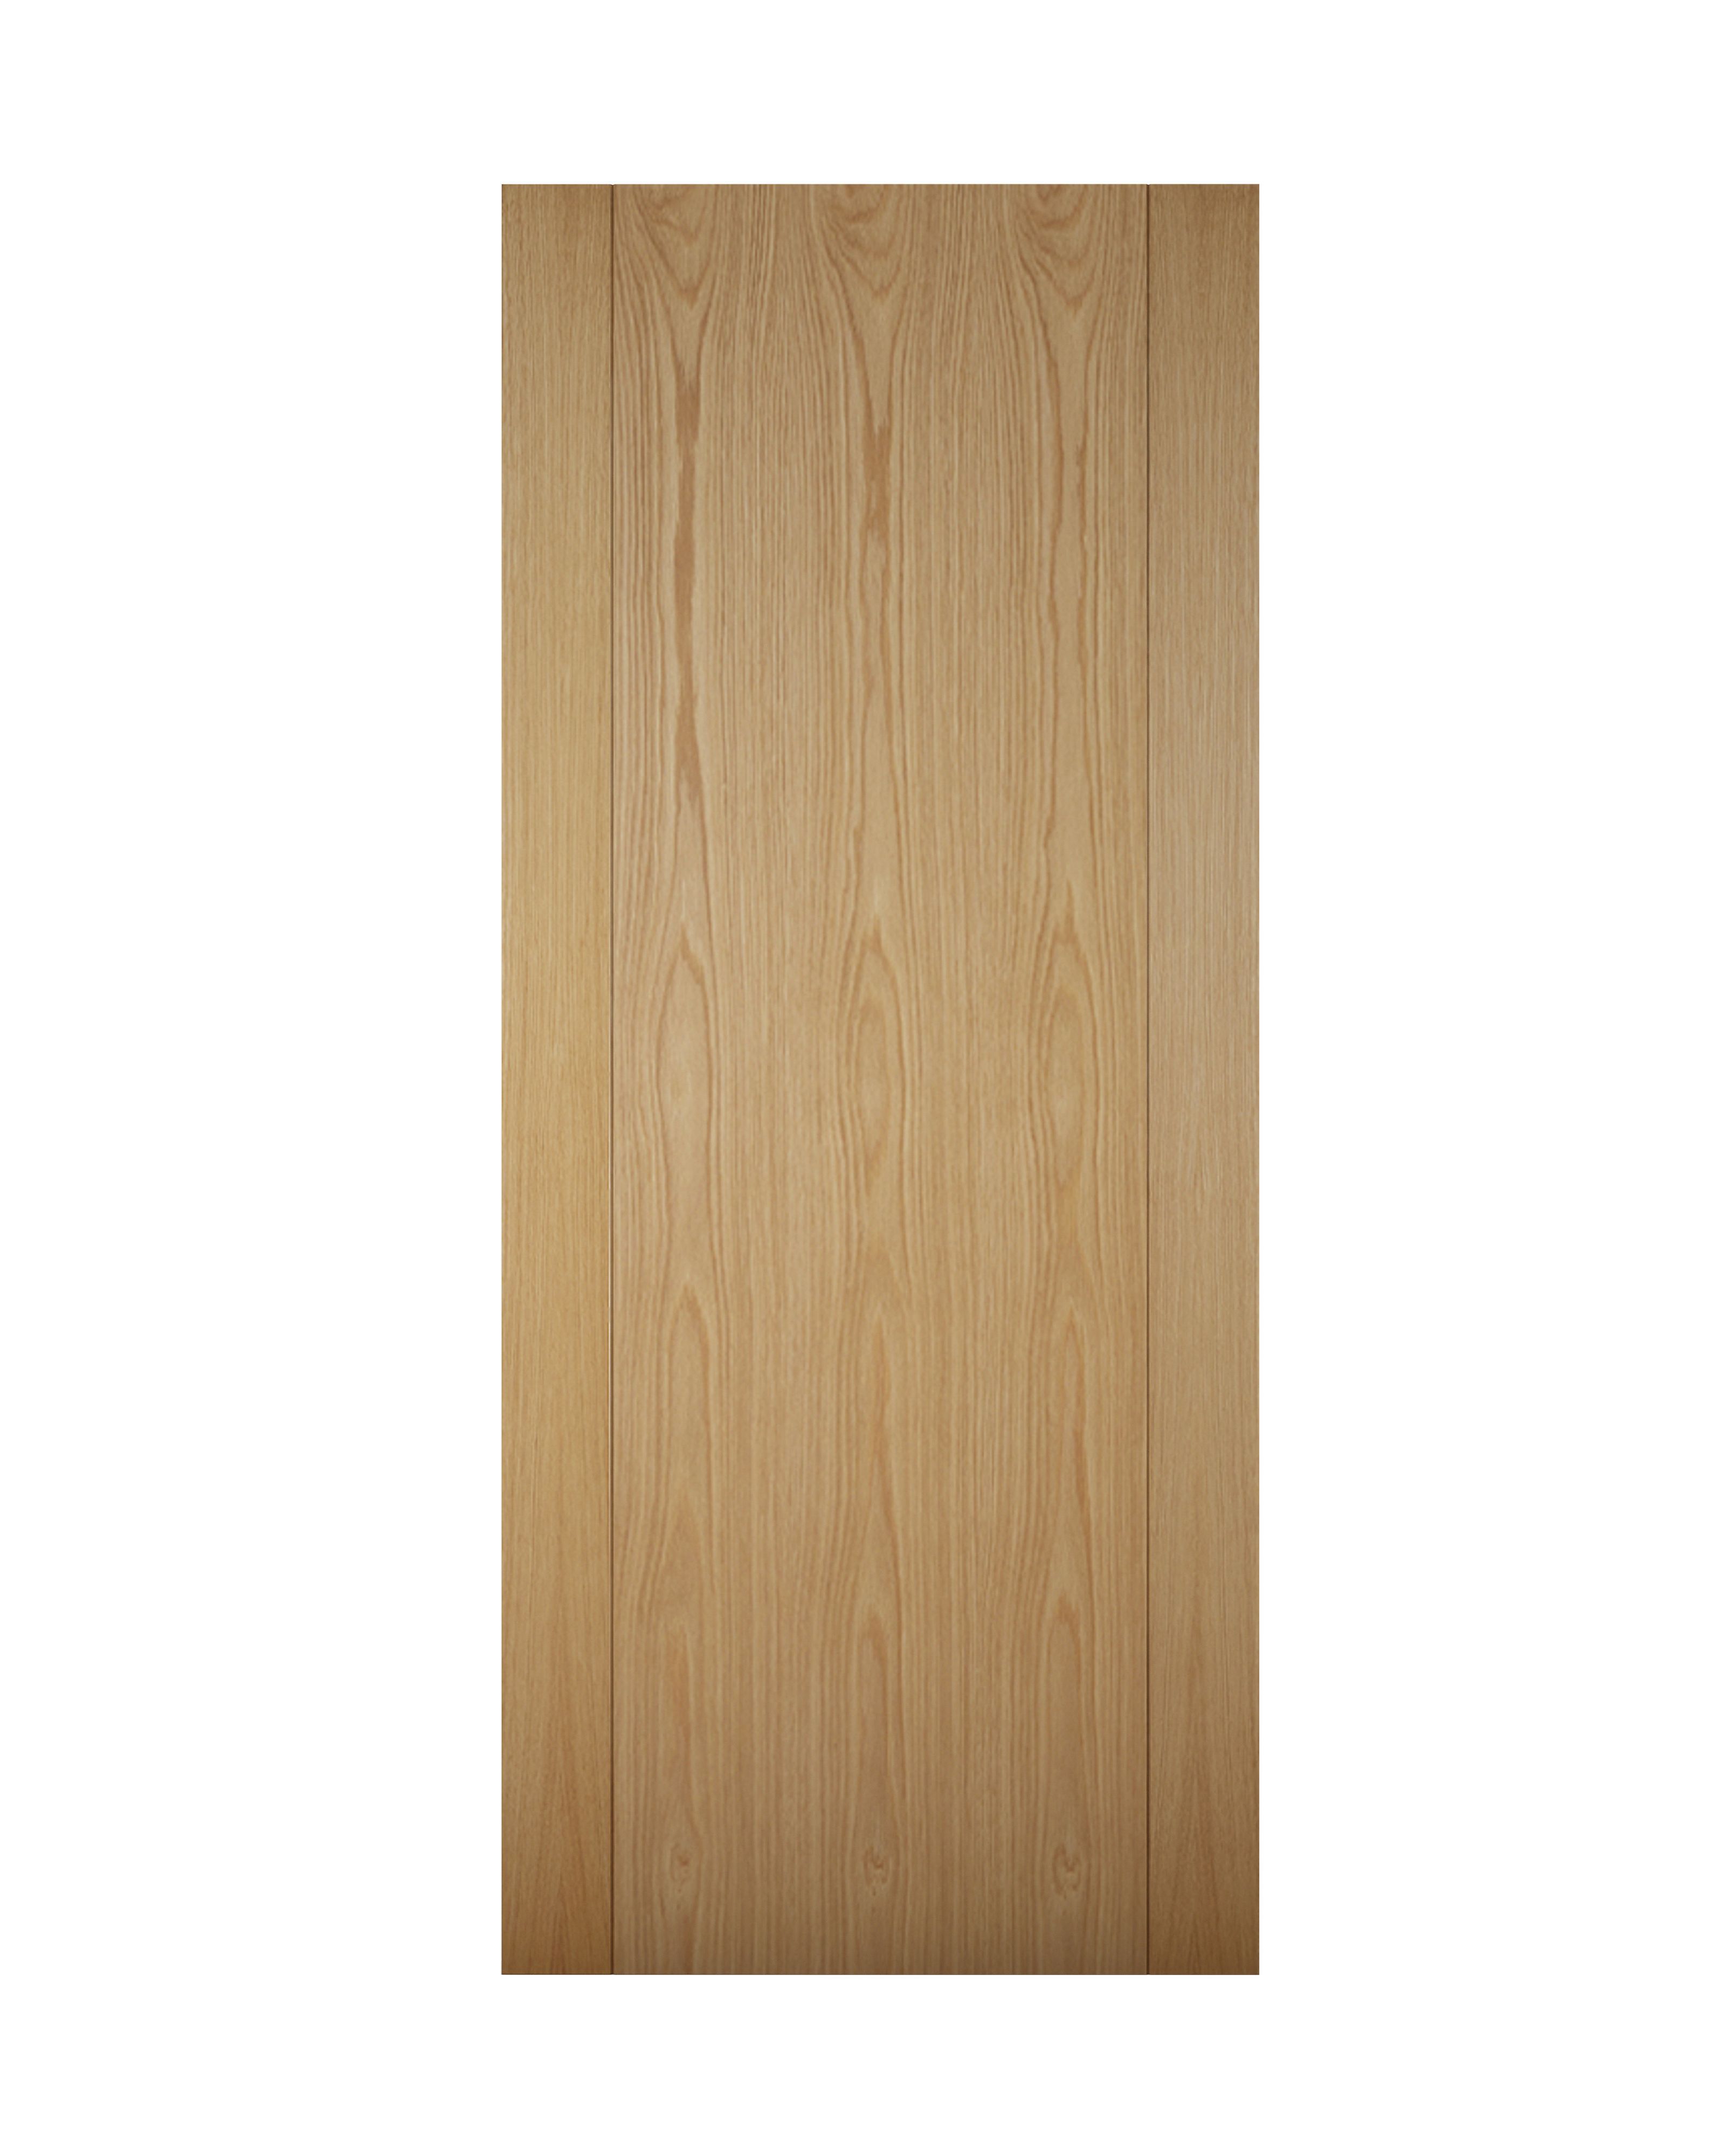 Veneered White oak veneer Front door & frame, (H)2125mm (W)907mm